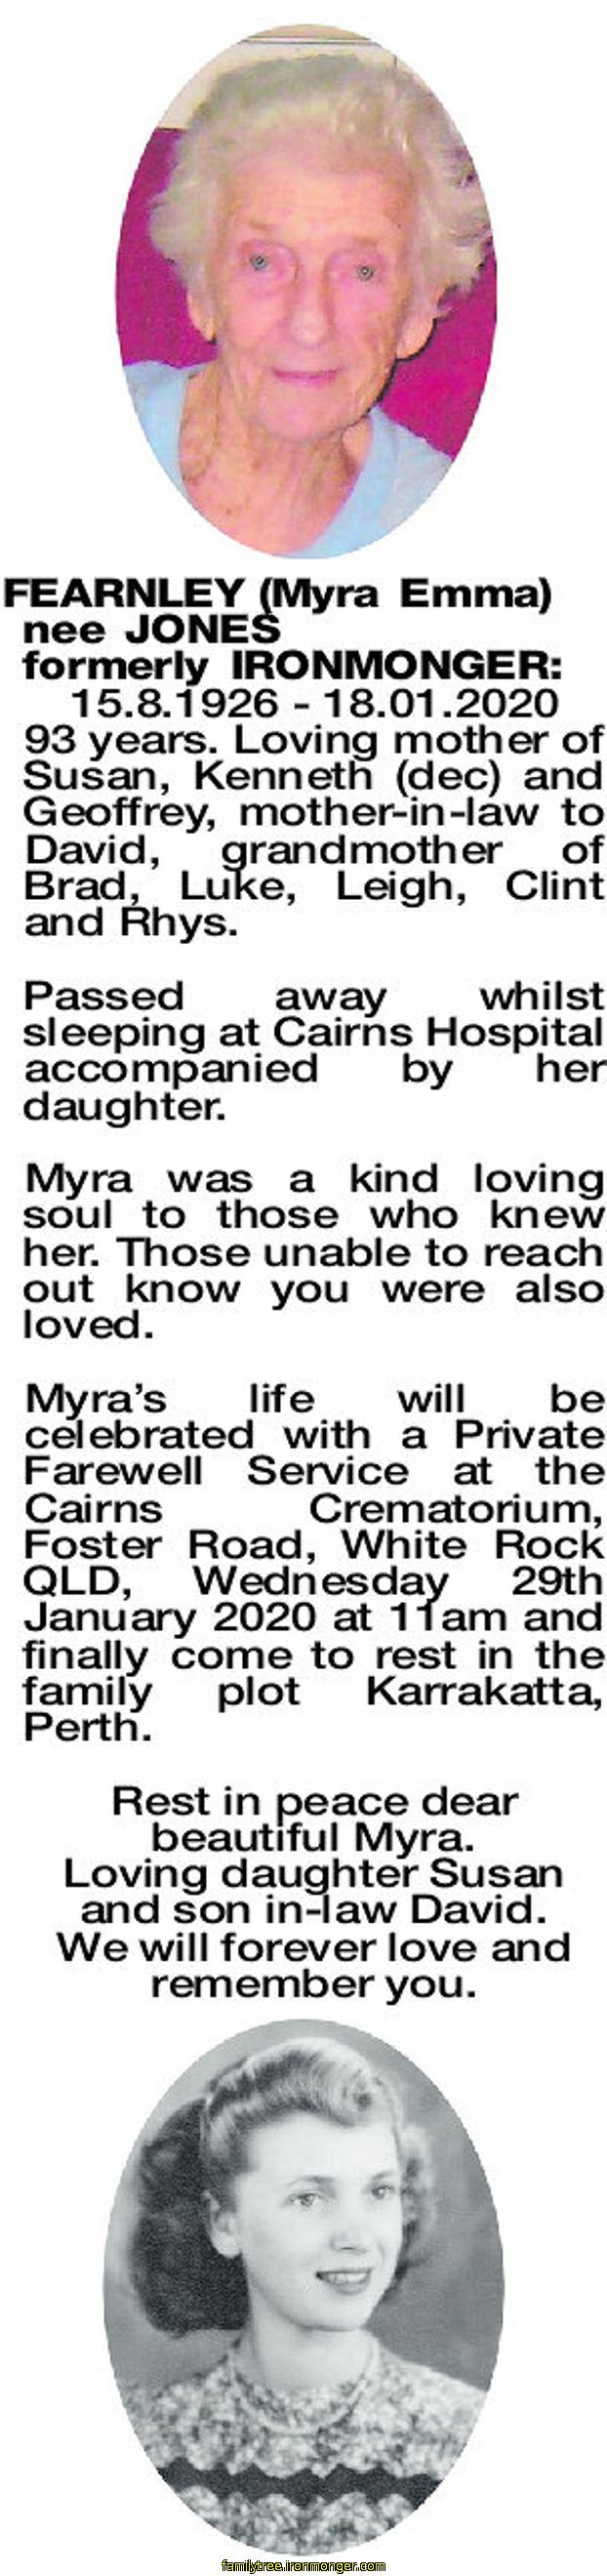 Myra Emma Fearnley Death Notice, West Australian January 2020